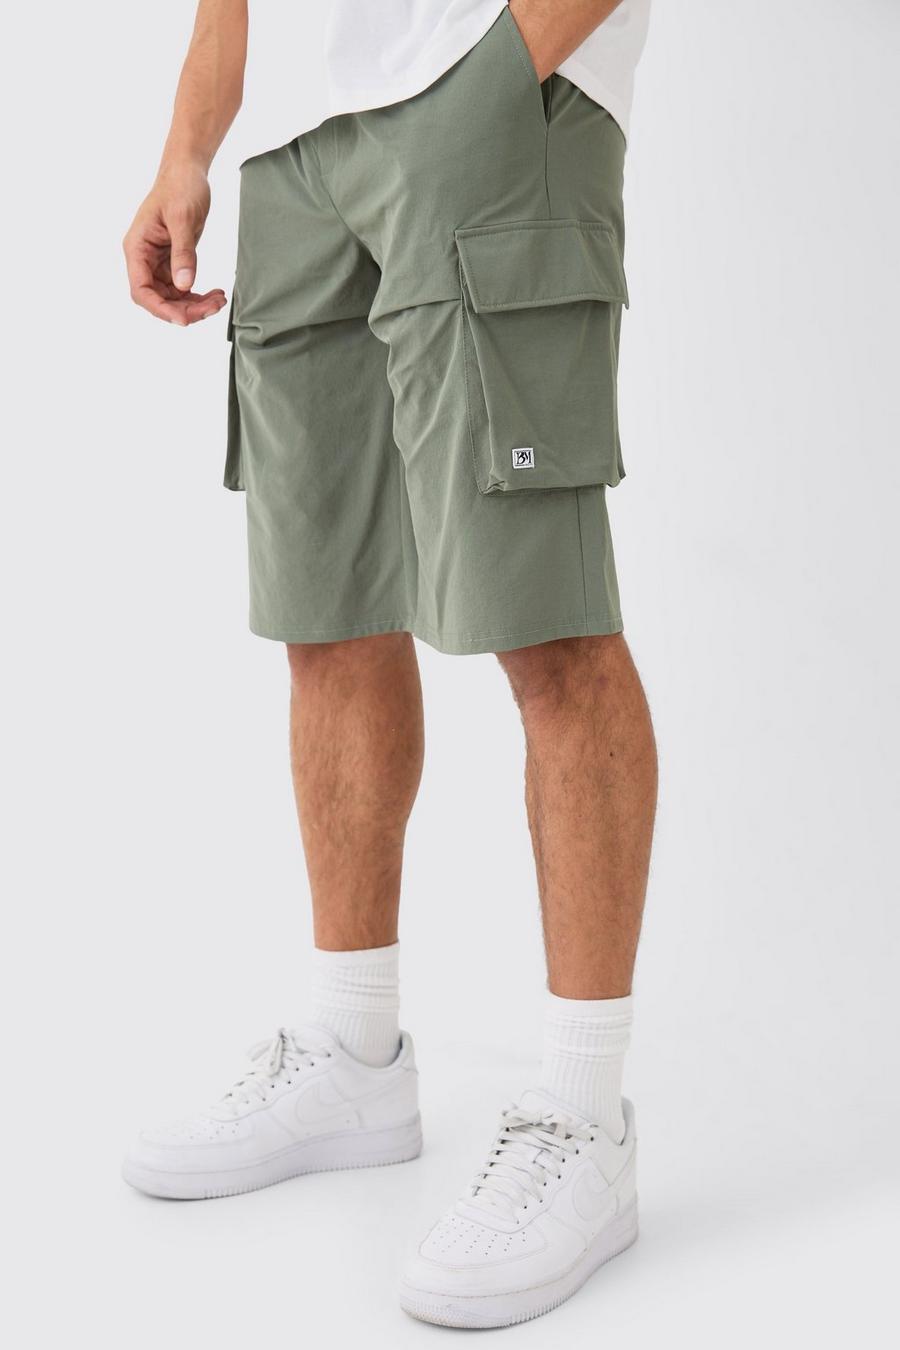 Lockere elastische Stretch-Shorts mit Logo, Khaki